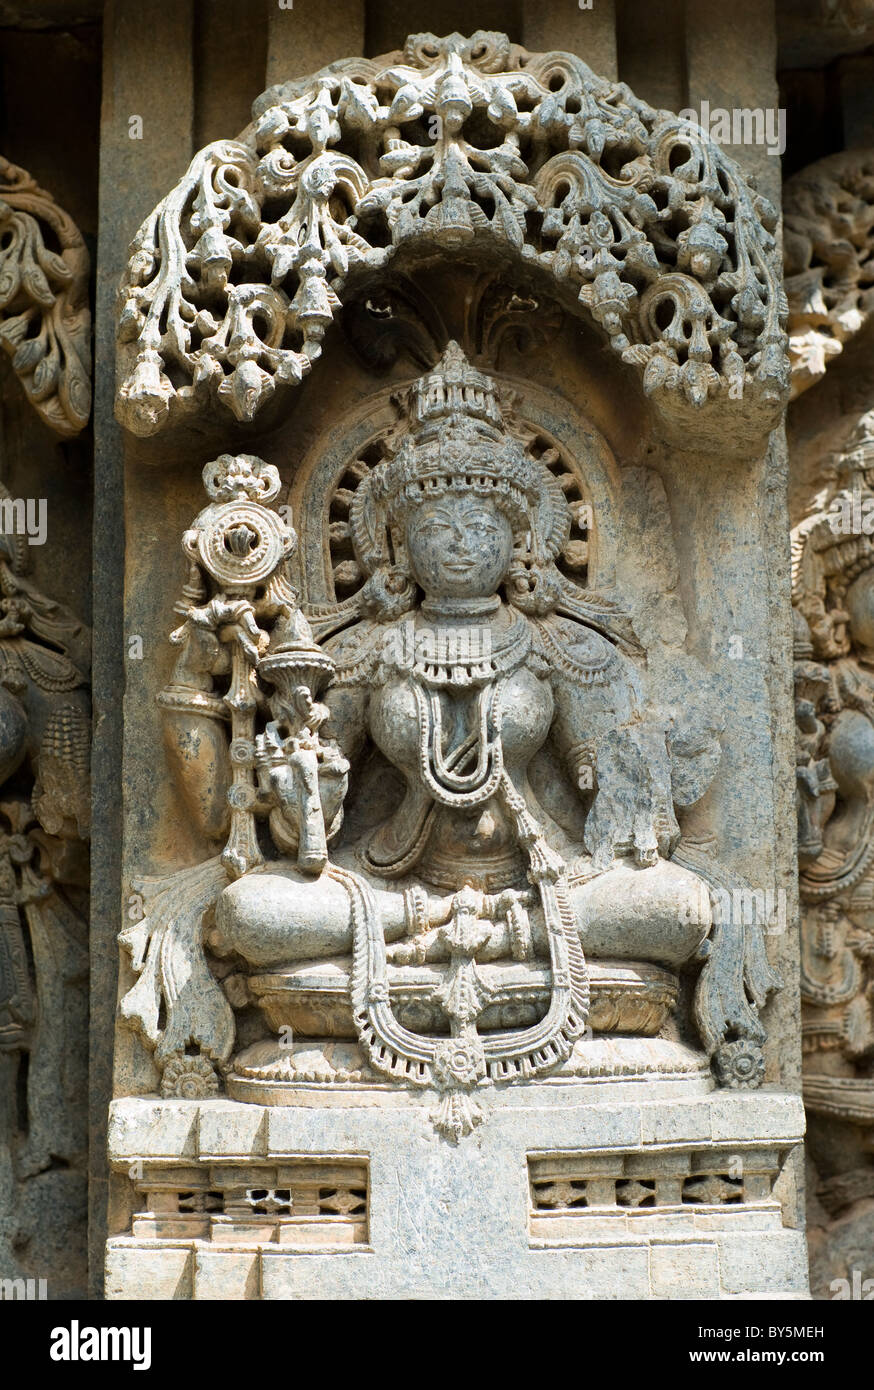 Carved detail in a wall in the Chennakesava Temple, Somanathapura, Karnataka, India Stock Photo